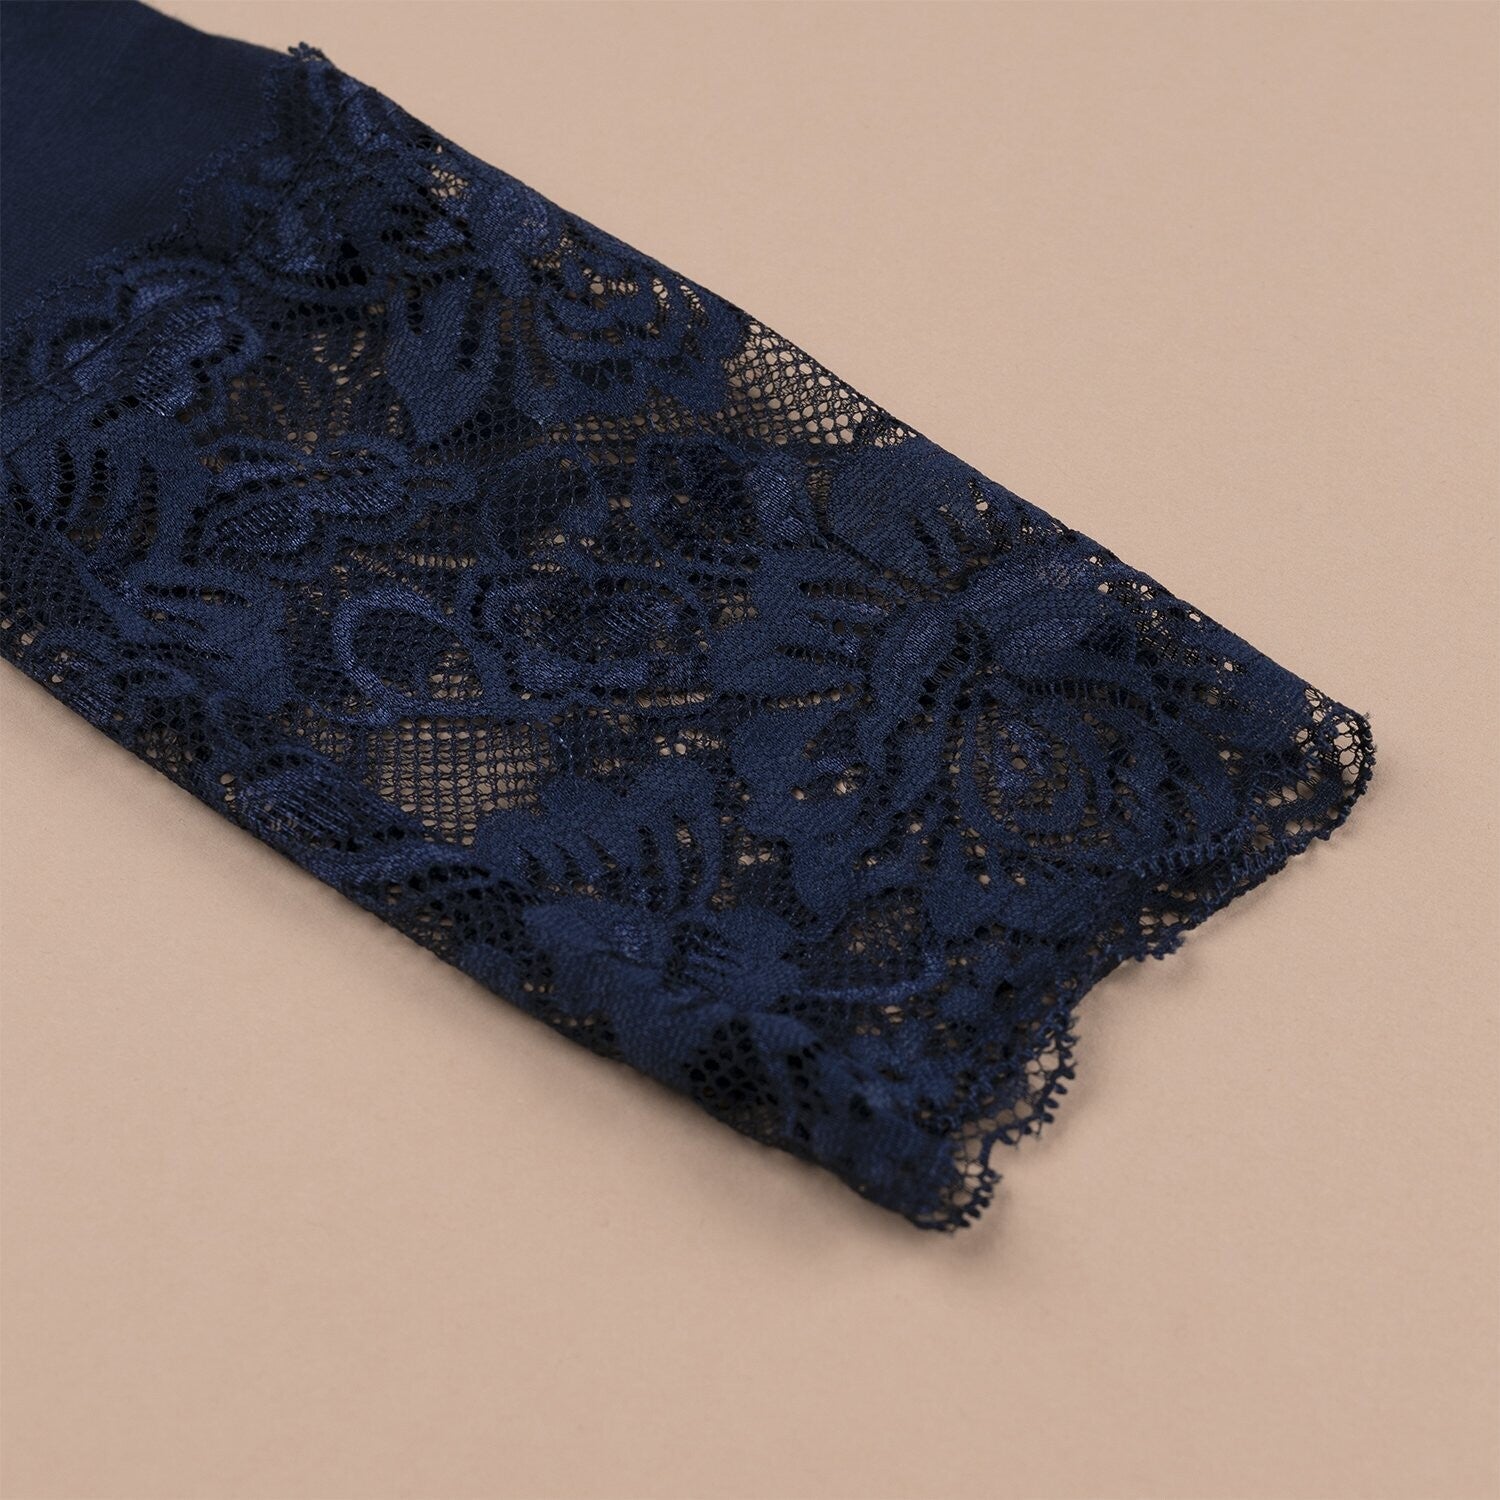 HANNAH - Long sleeve undertop with turtleneck & floral lace details